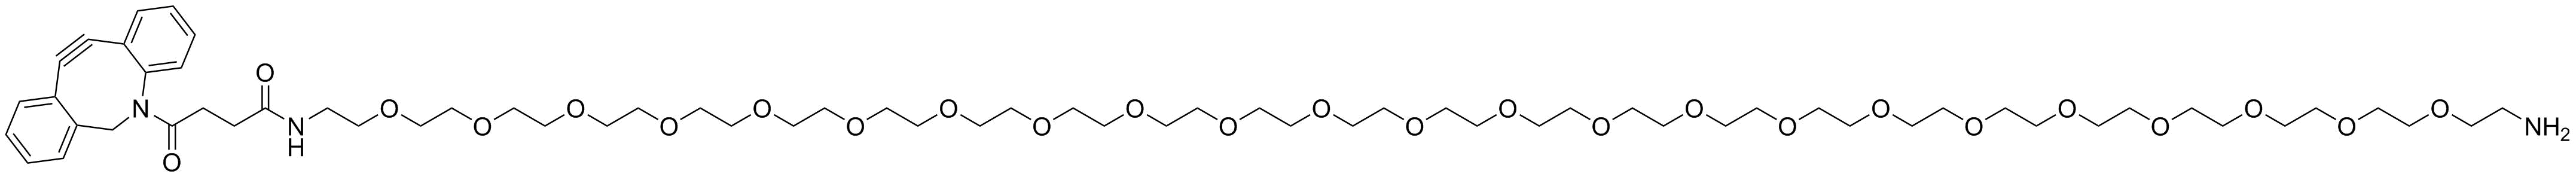 DBCO-PEG23-amine TFA salt